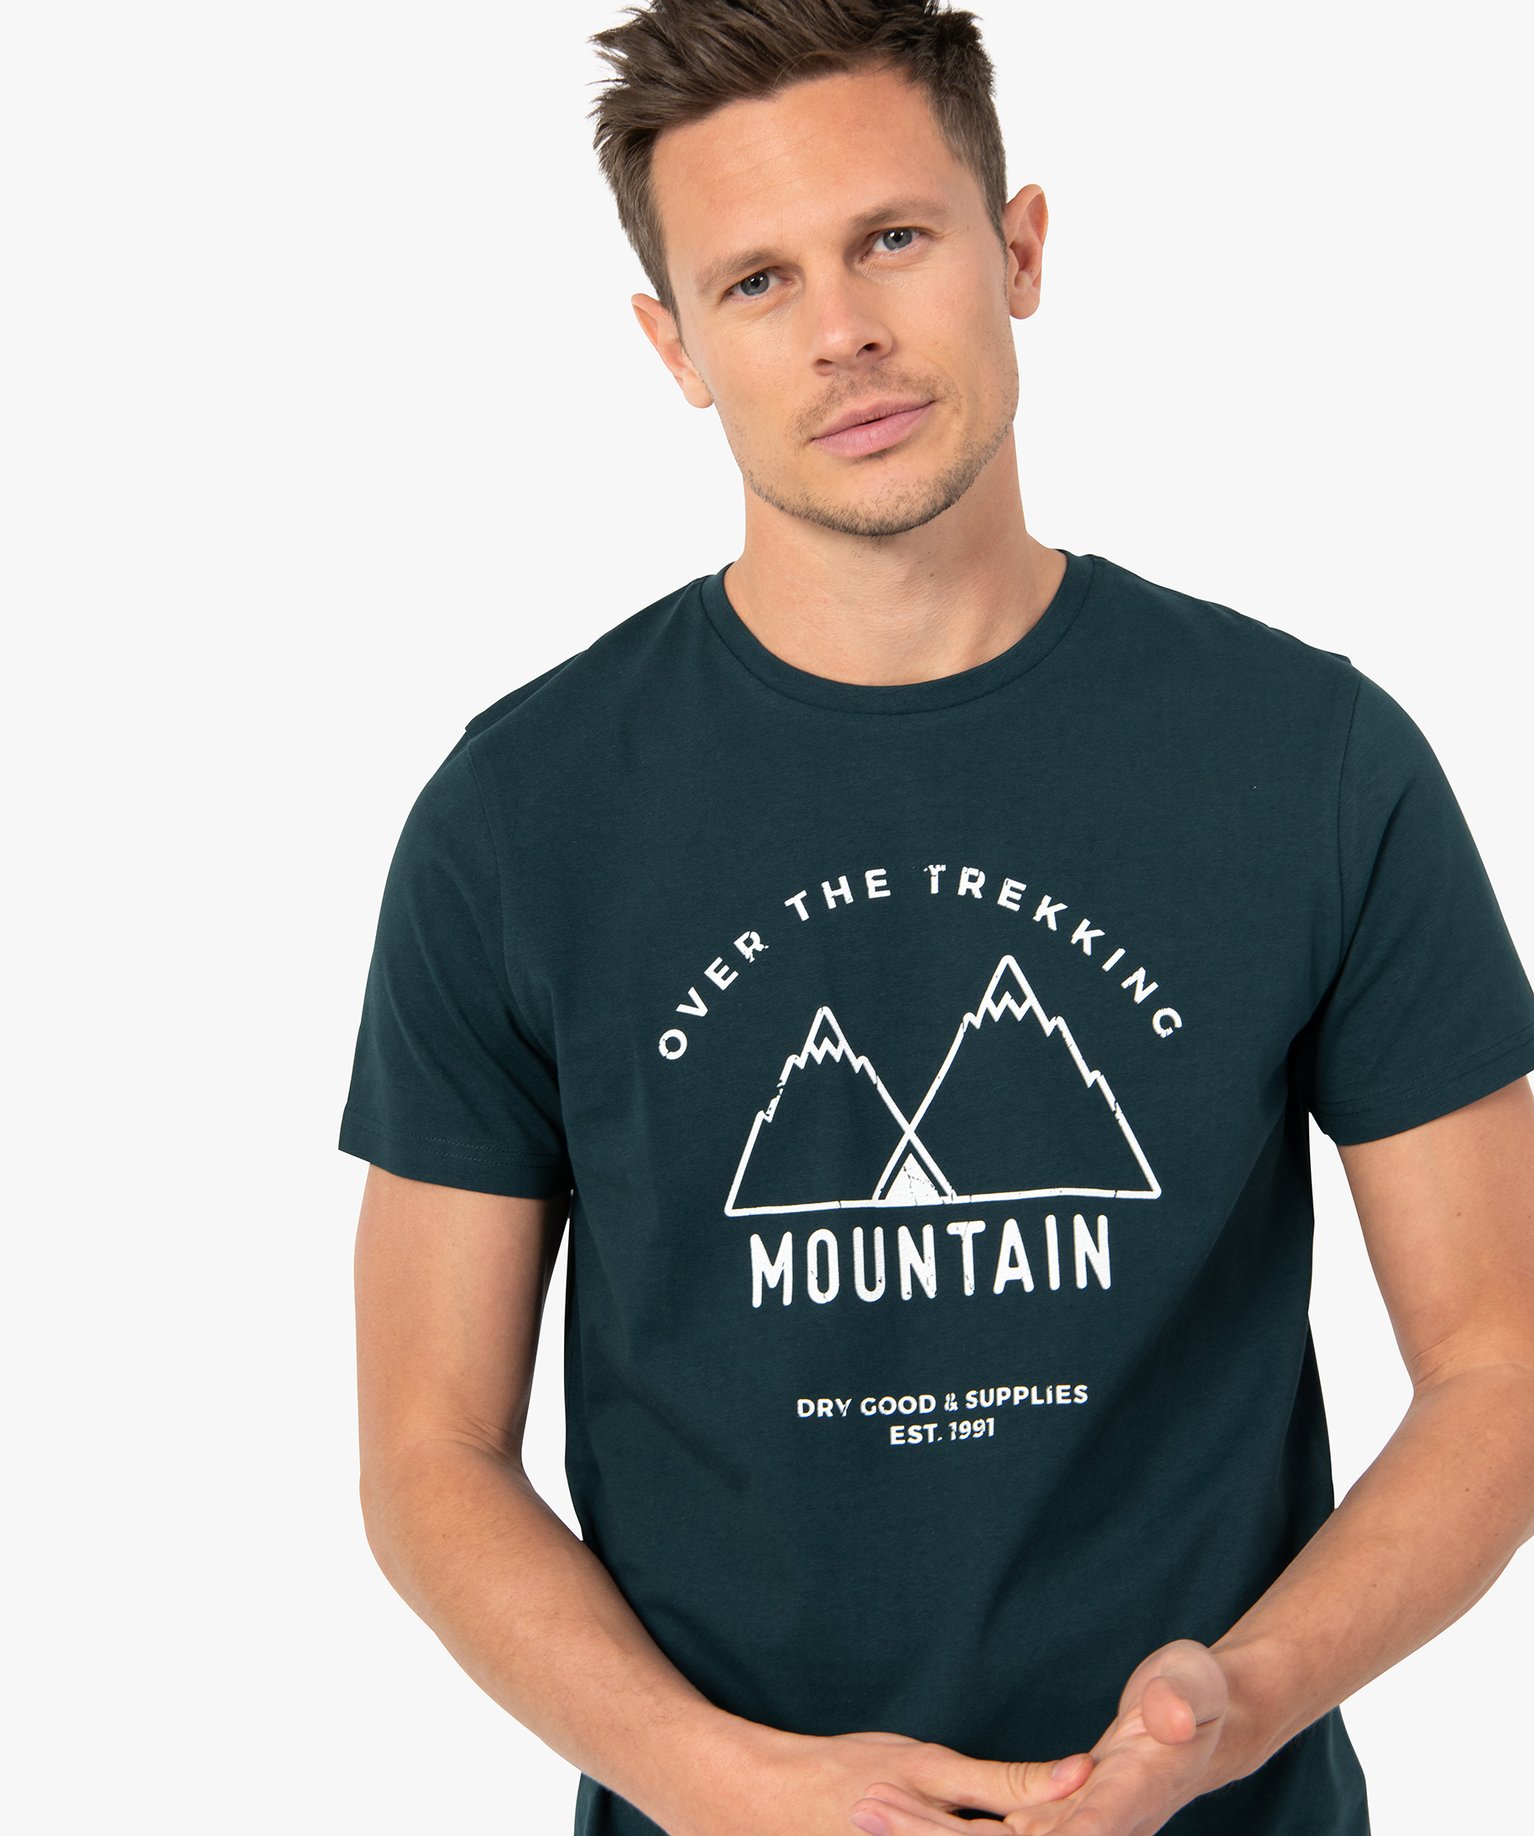 tee-shirt homme a manches courtes et motif montagne vert tee-shirts